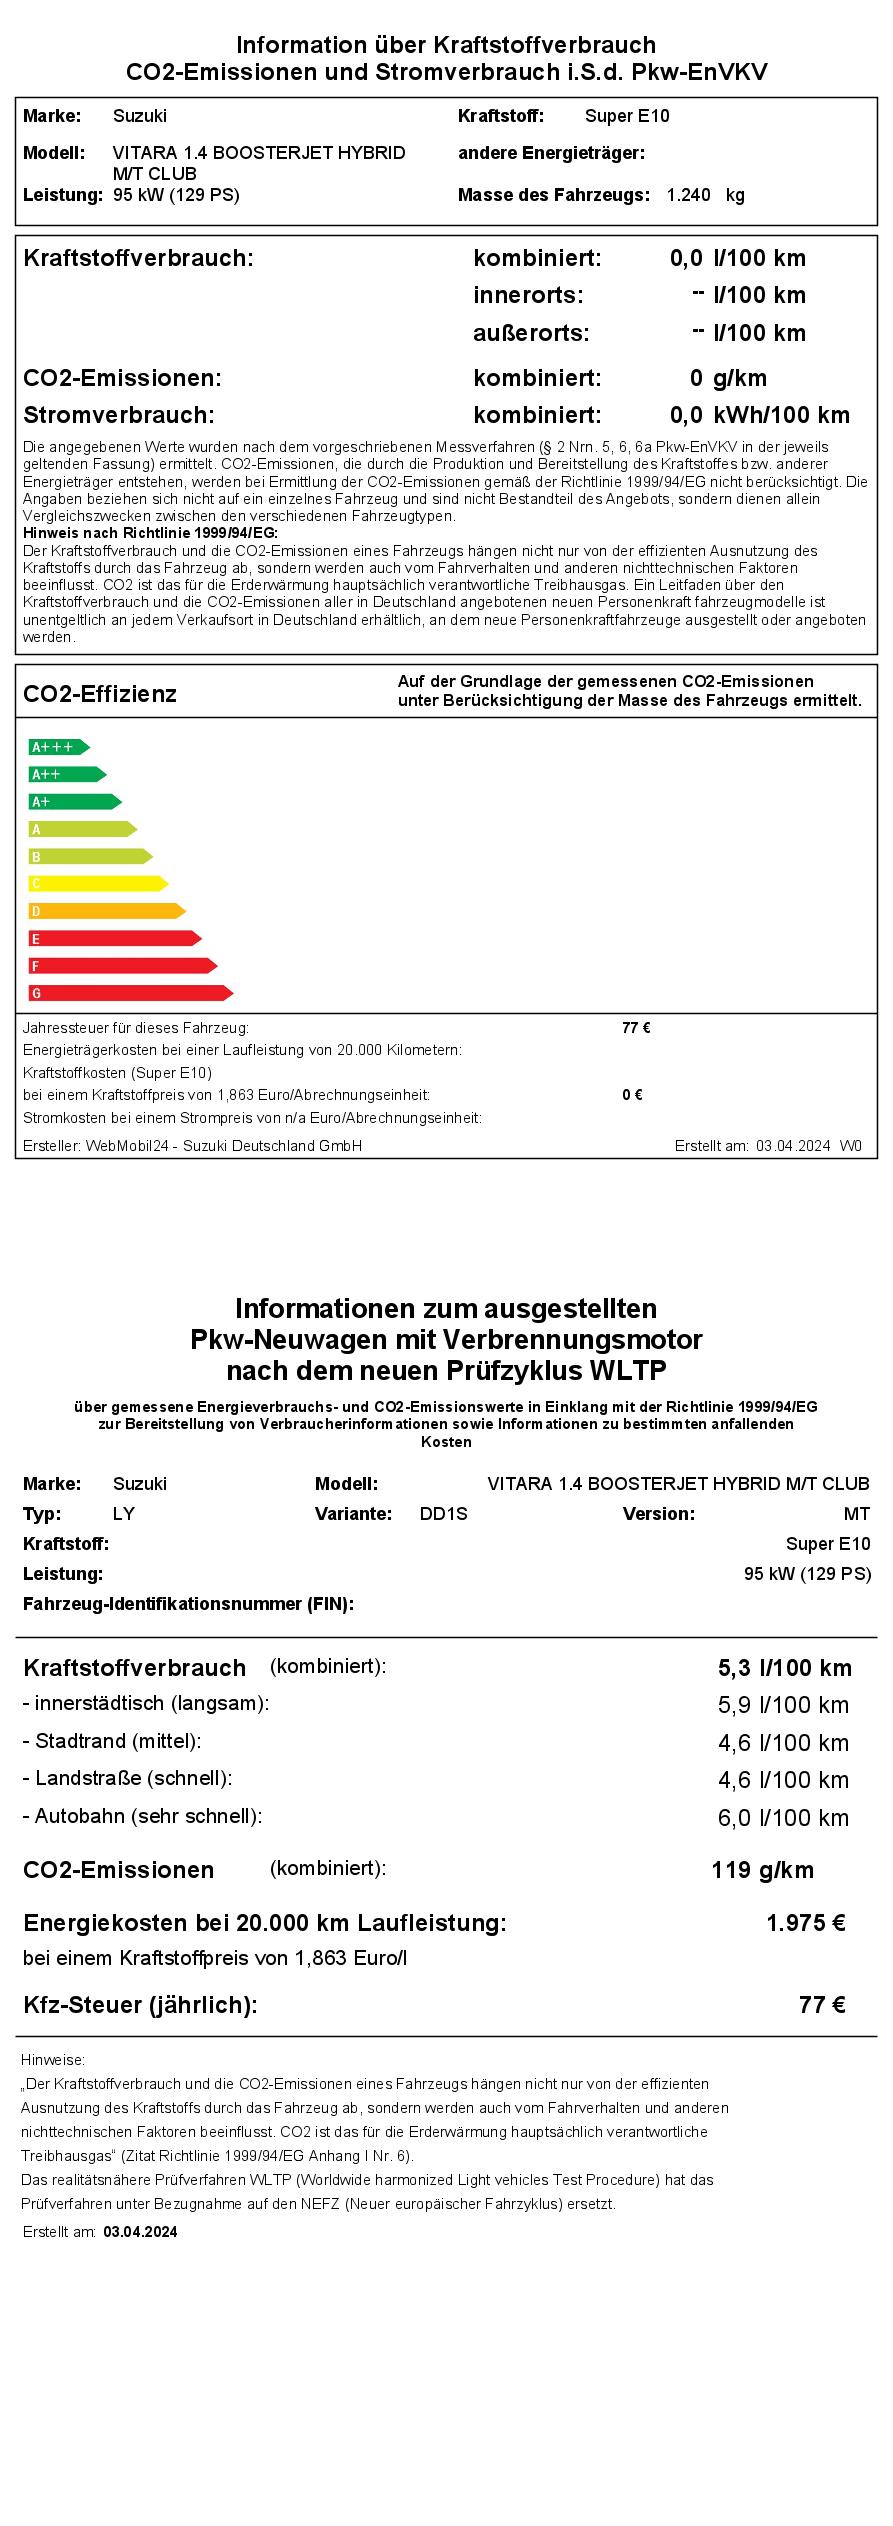 Vitara 5-Türer - 1.4 BOOSTERJET HYBRID - Club Energie Label (Bild)